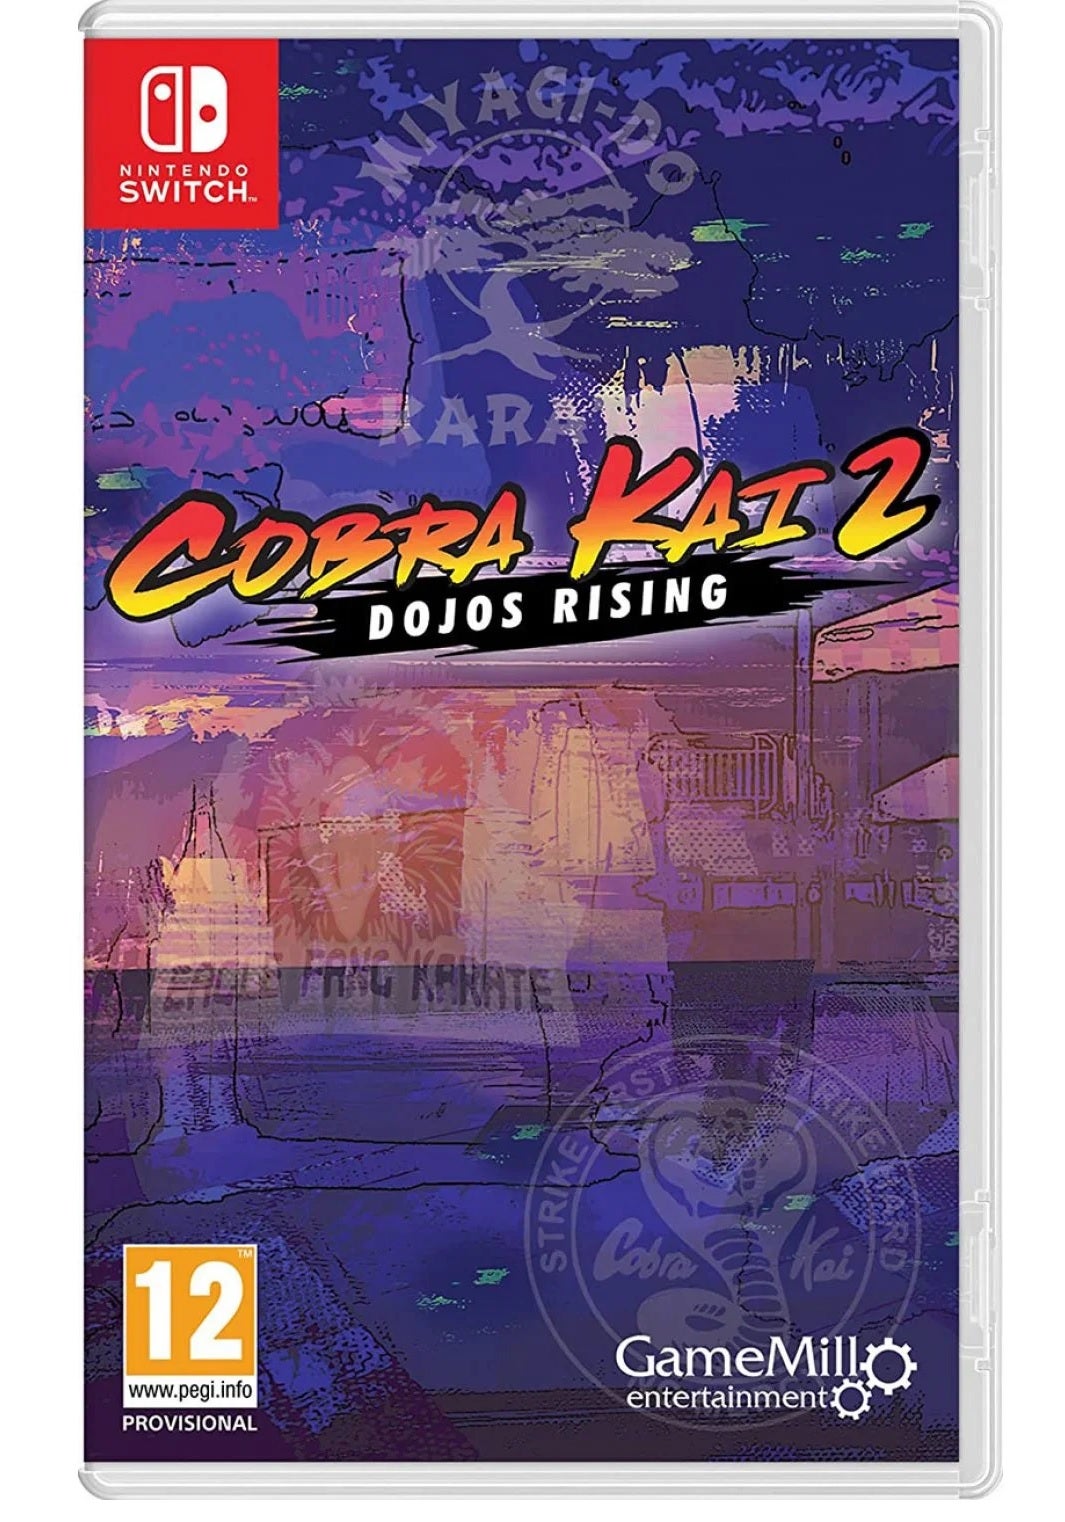 GameMill Entertainment Cobra Kai 2 Dojos Rising Nintendo Switch Game